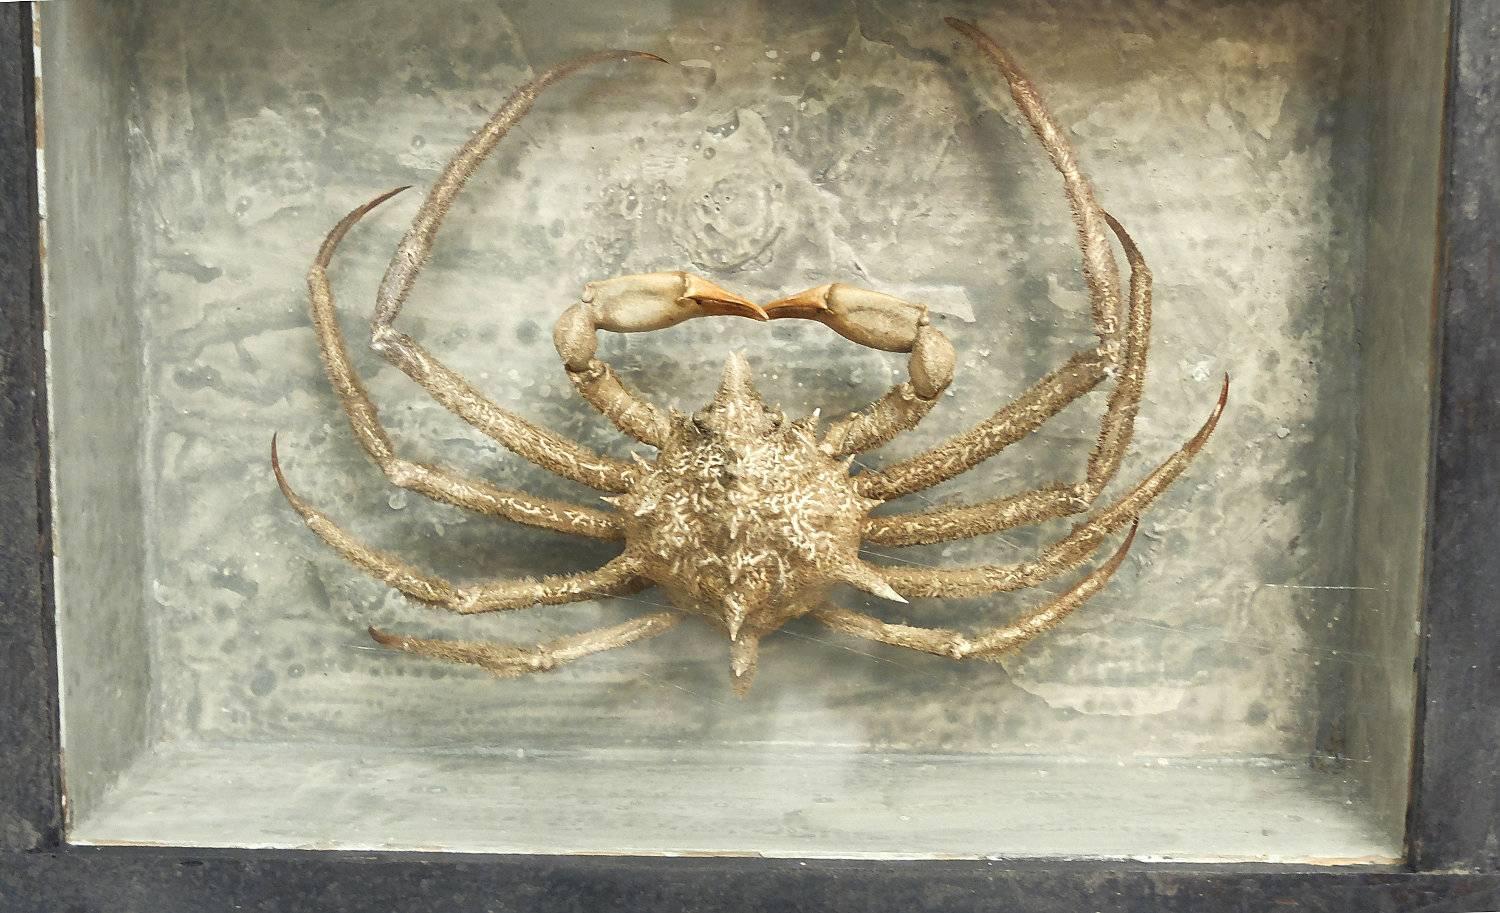 Late 19th Century Rare Marine Natural Wunderkammer Specimen of a White Crab, Italy, circa 1880